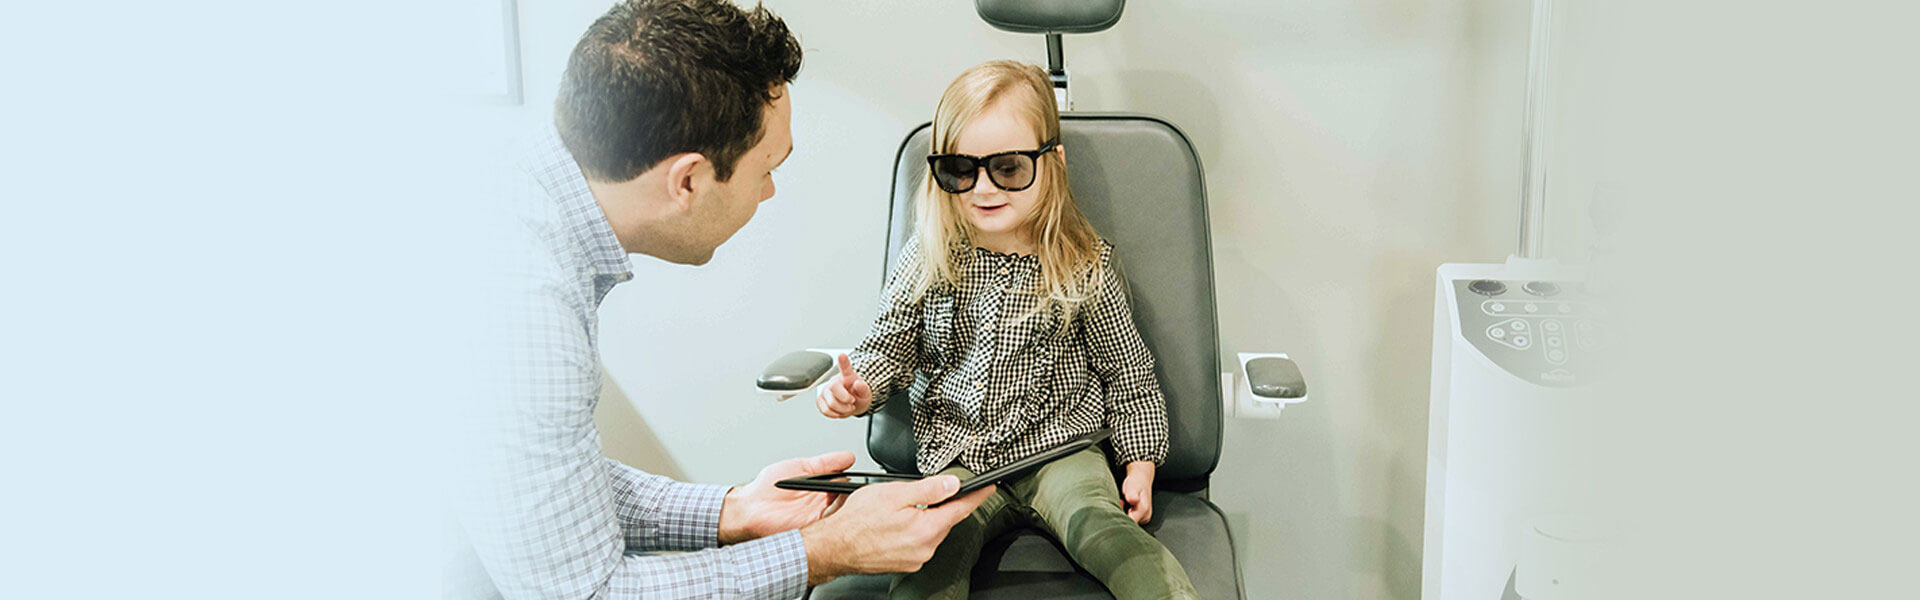 Children's Eye Examinations in Edmonton, AB